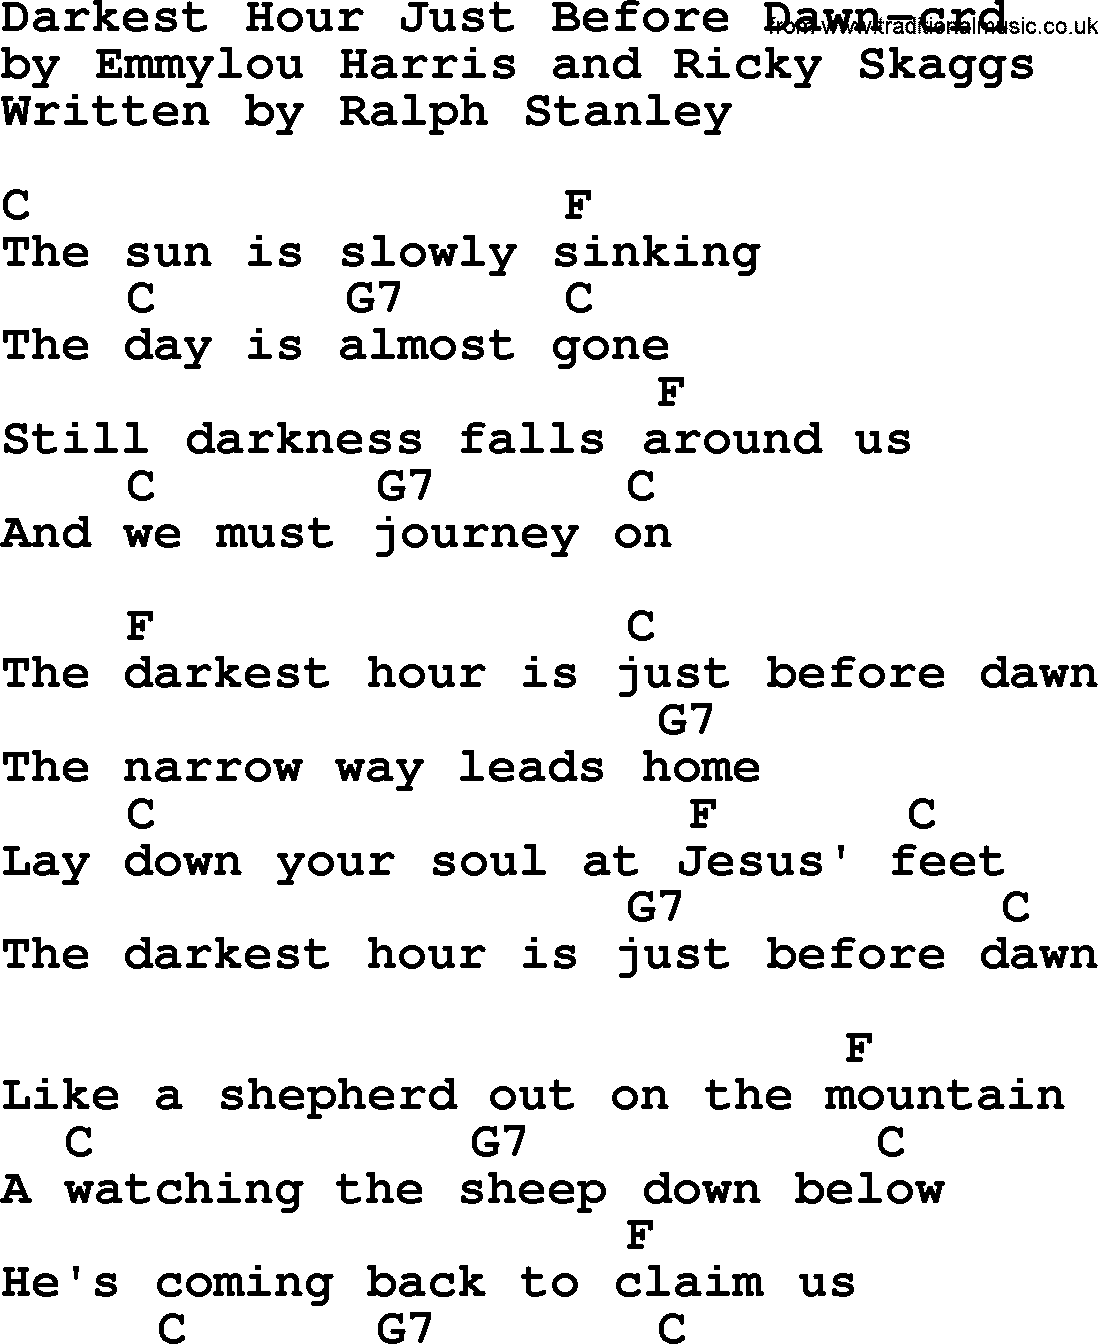 Emmylou Harris song: Darkest Hour Just Before Dawn lyrics and chords